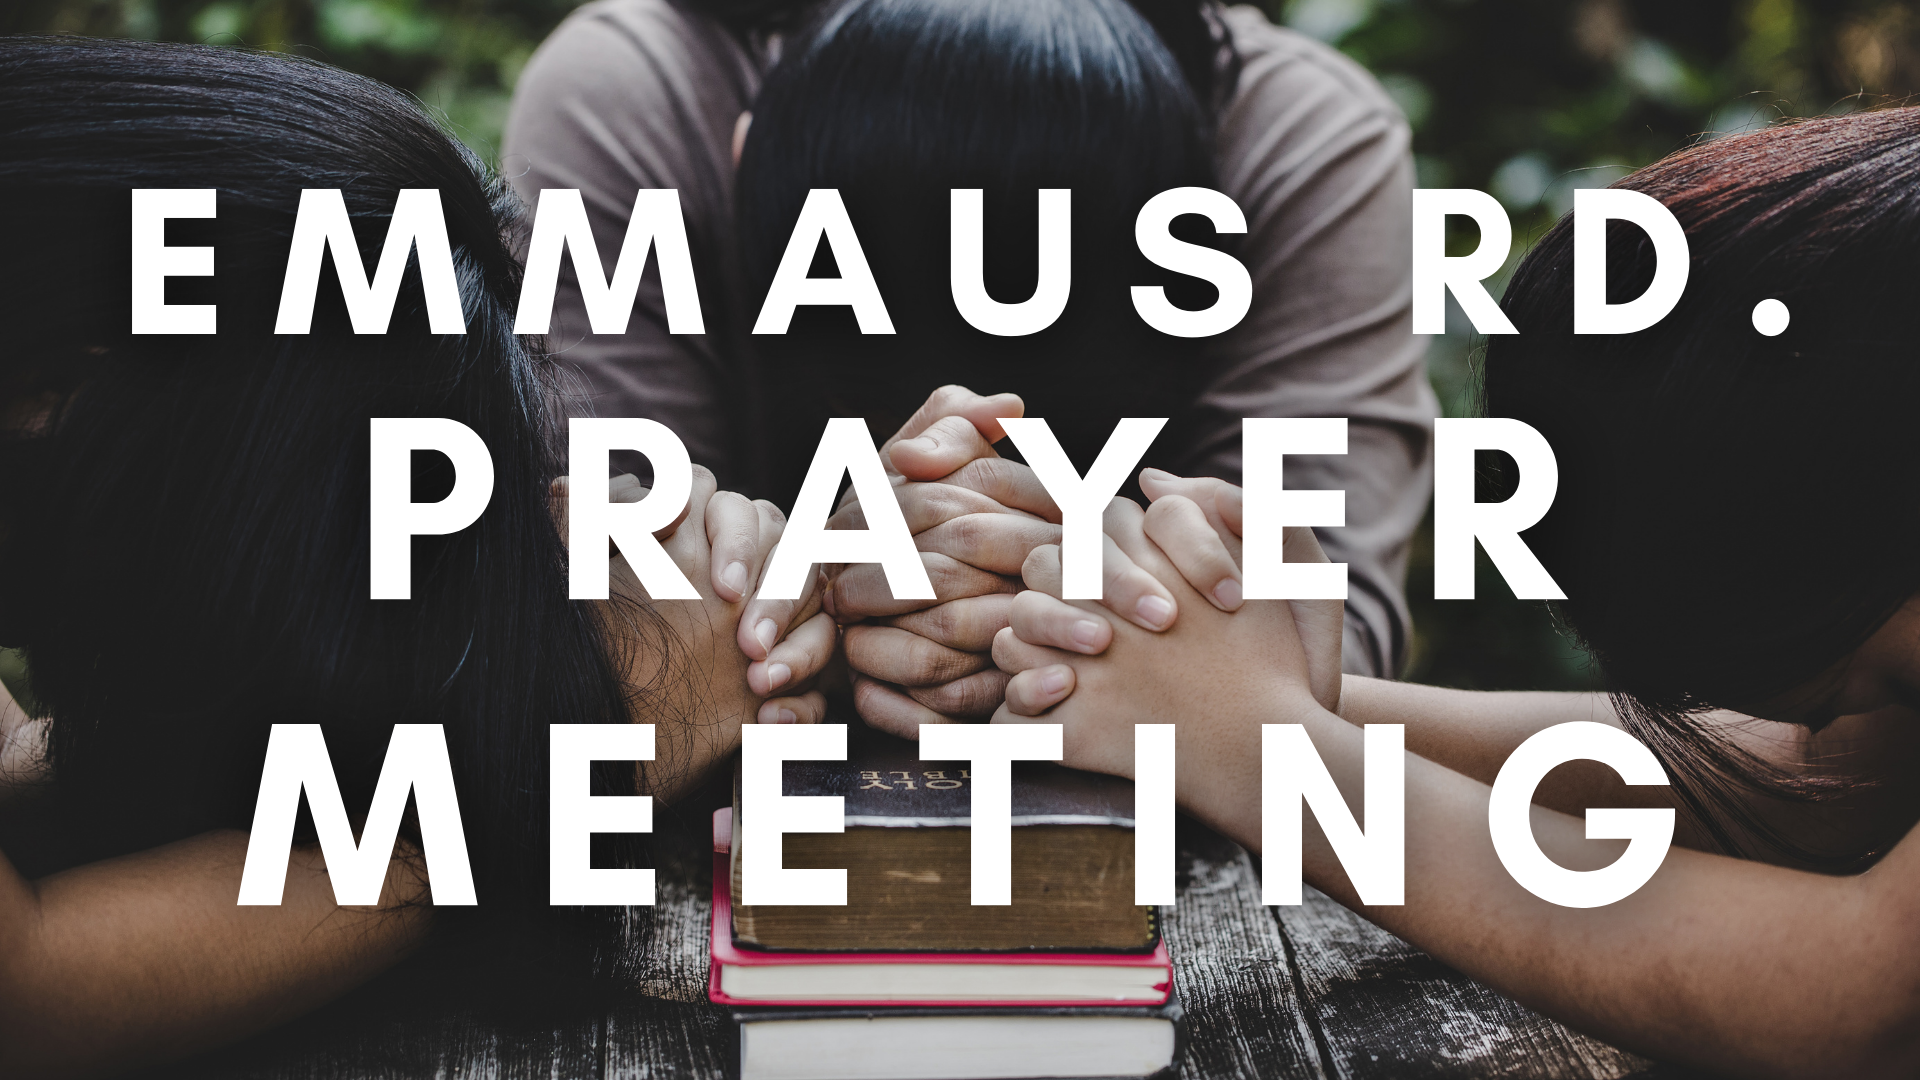 Emmaus Rd. Prayer Meeting image